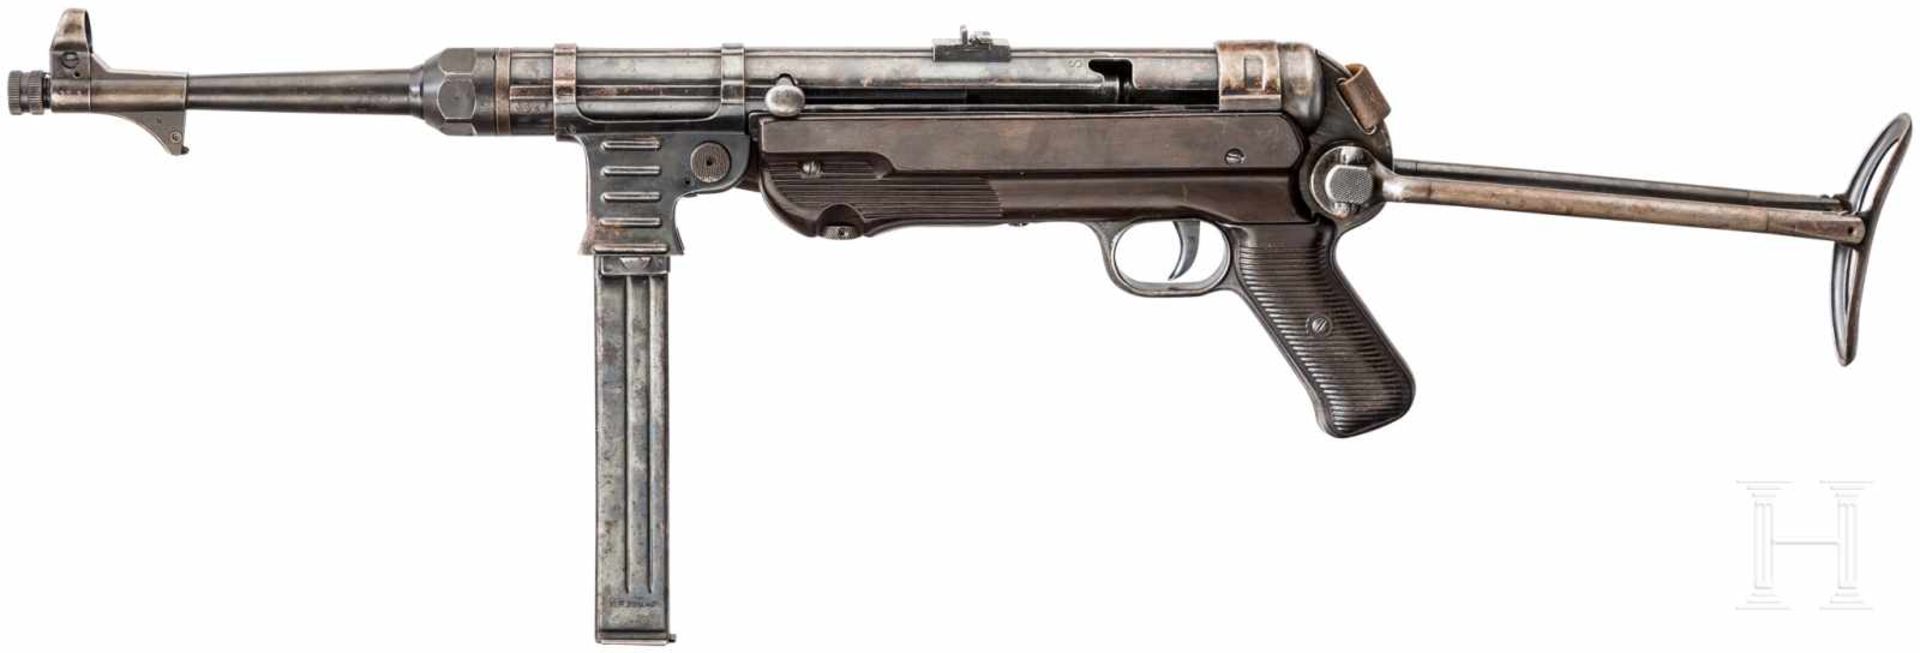 Originale Maschinenpistole Mod. 40 ("MP 40"), Code "660 - 40"Kal. 9 mm Luger, Nr. 3323d / 9183f, - Bild 2 aus 2